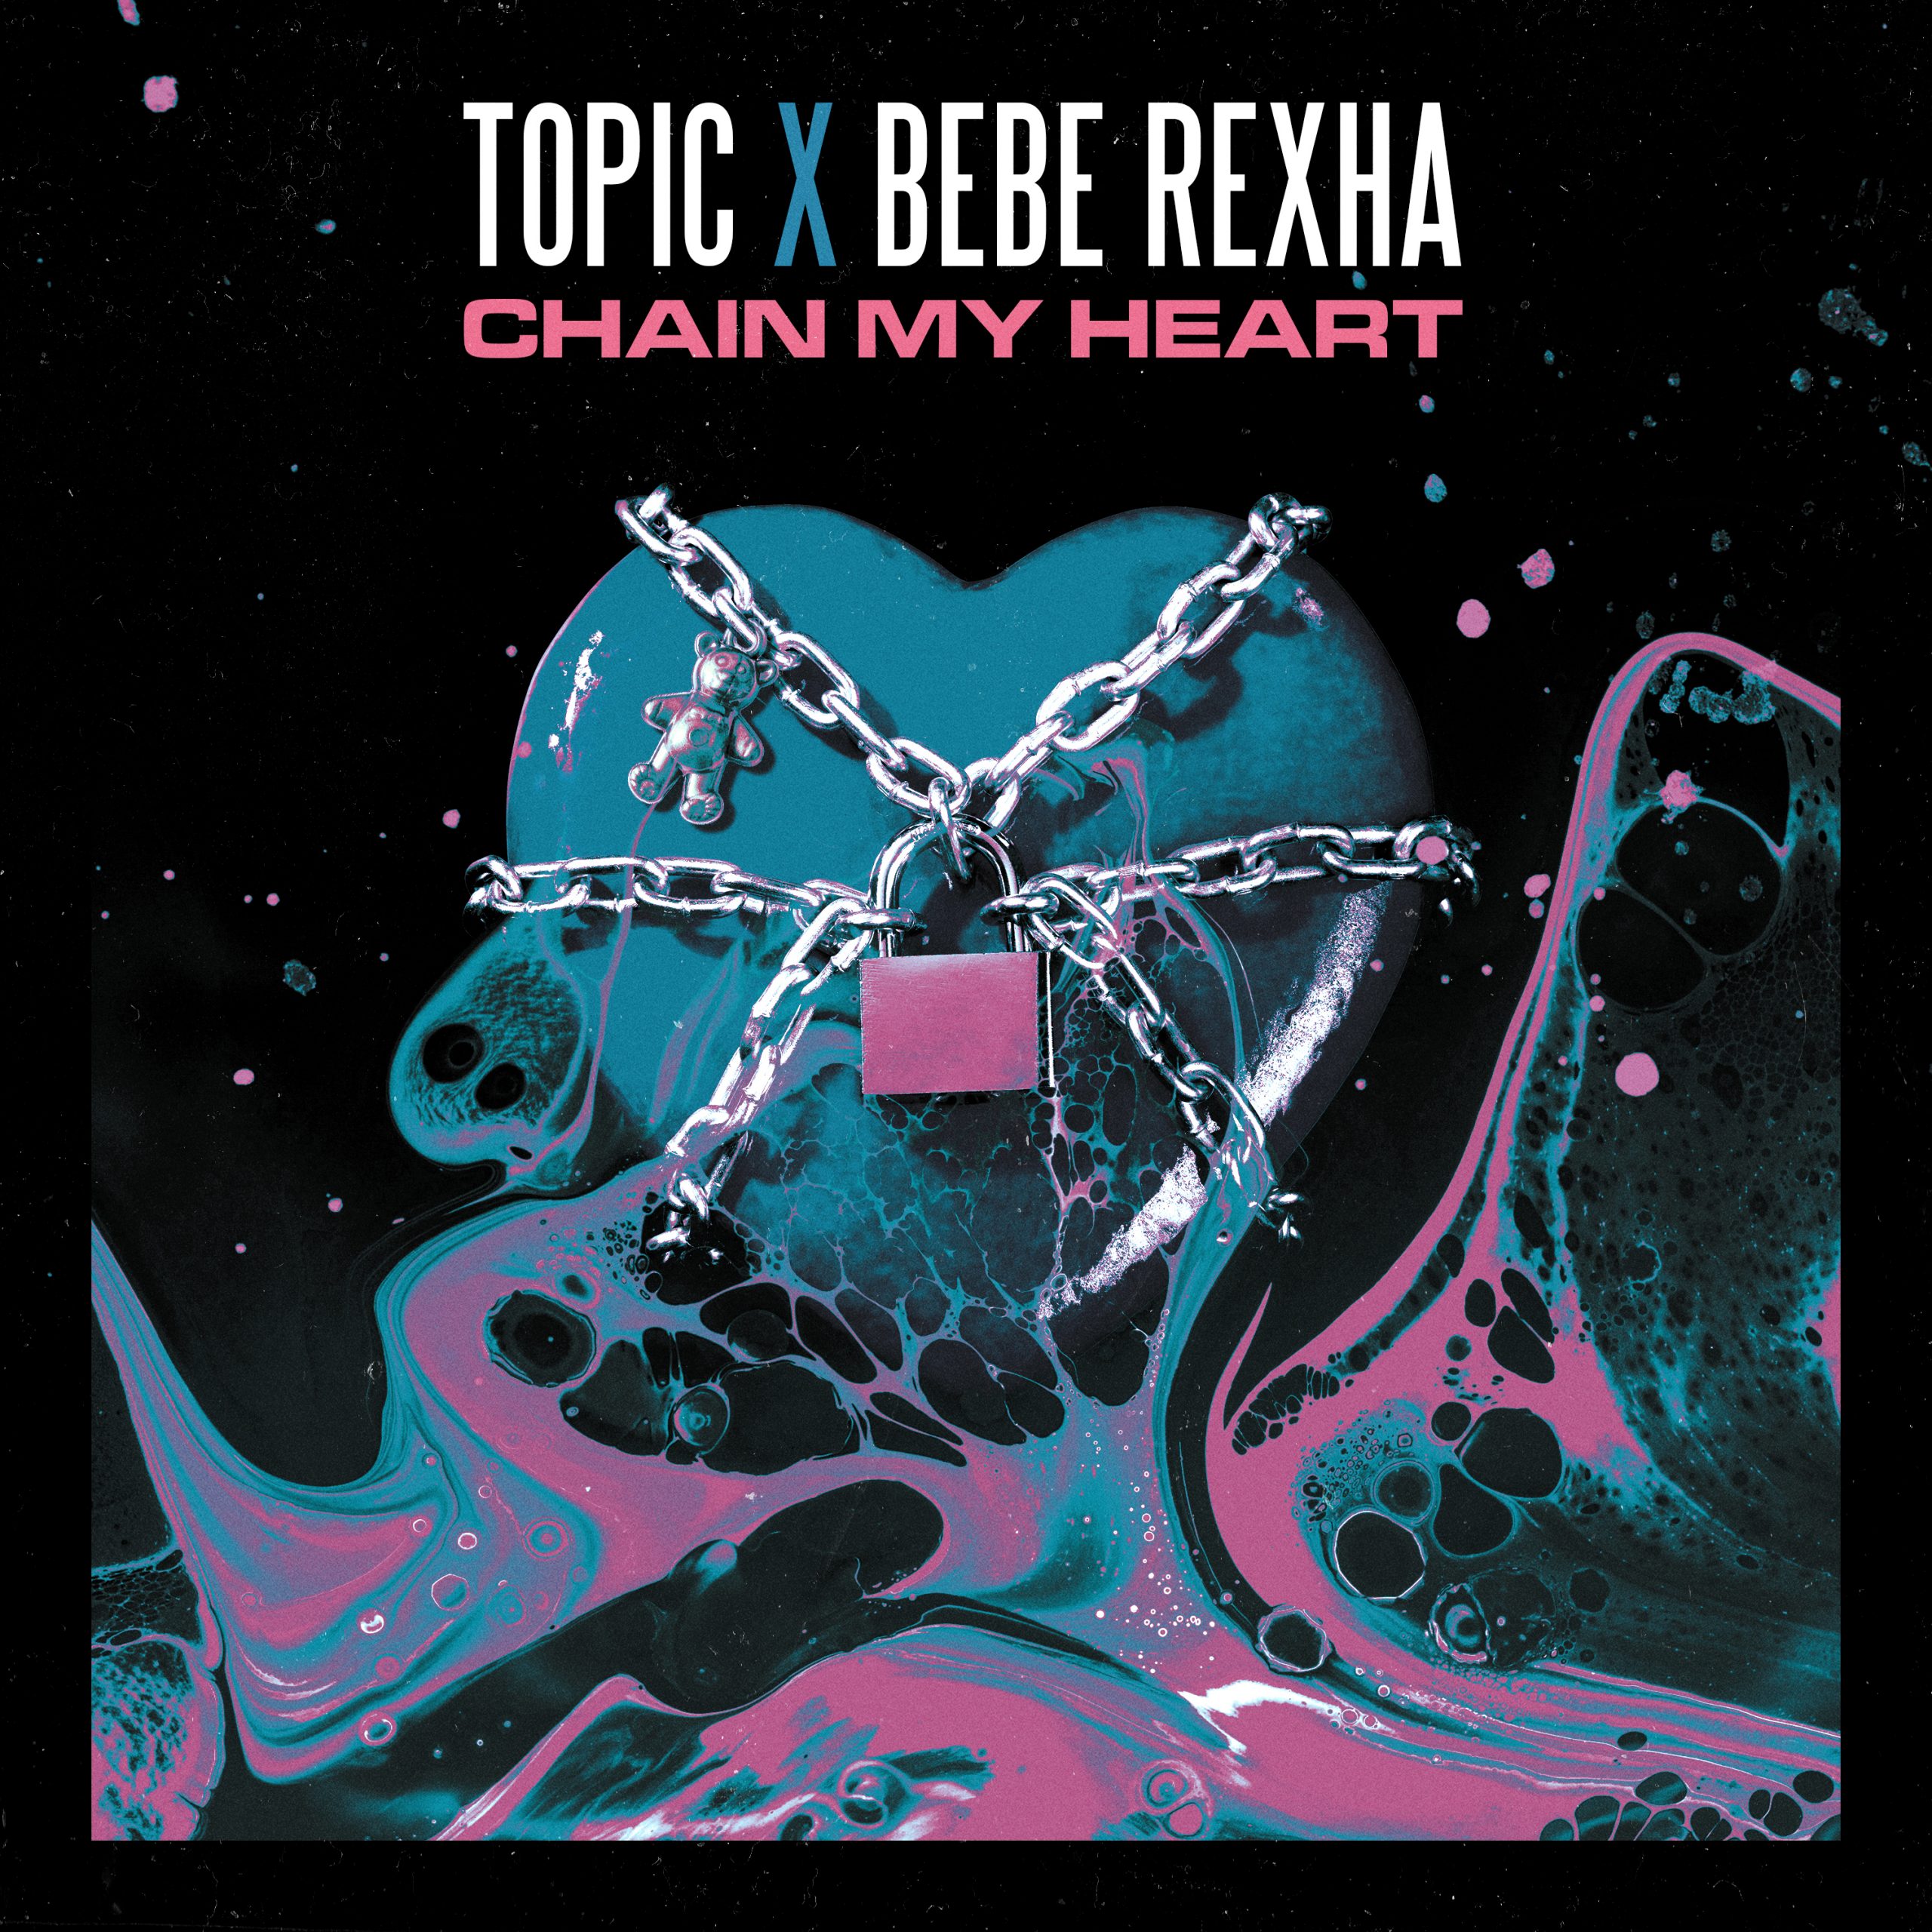 Topic and Bebe Rexha - "Chain My Heart" single artwork